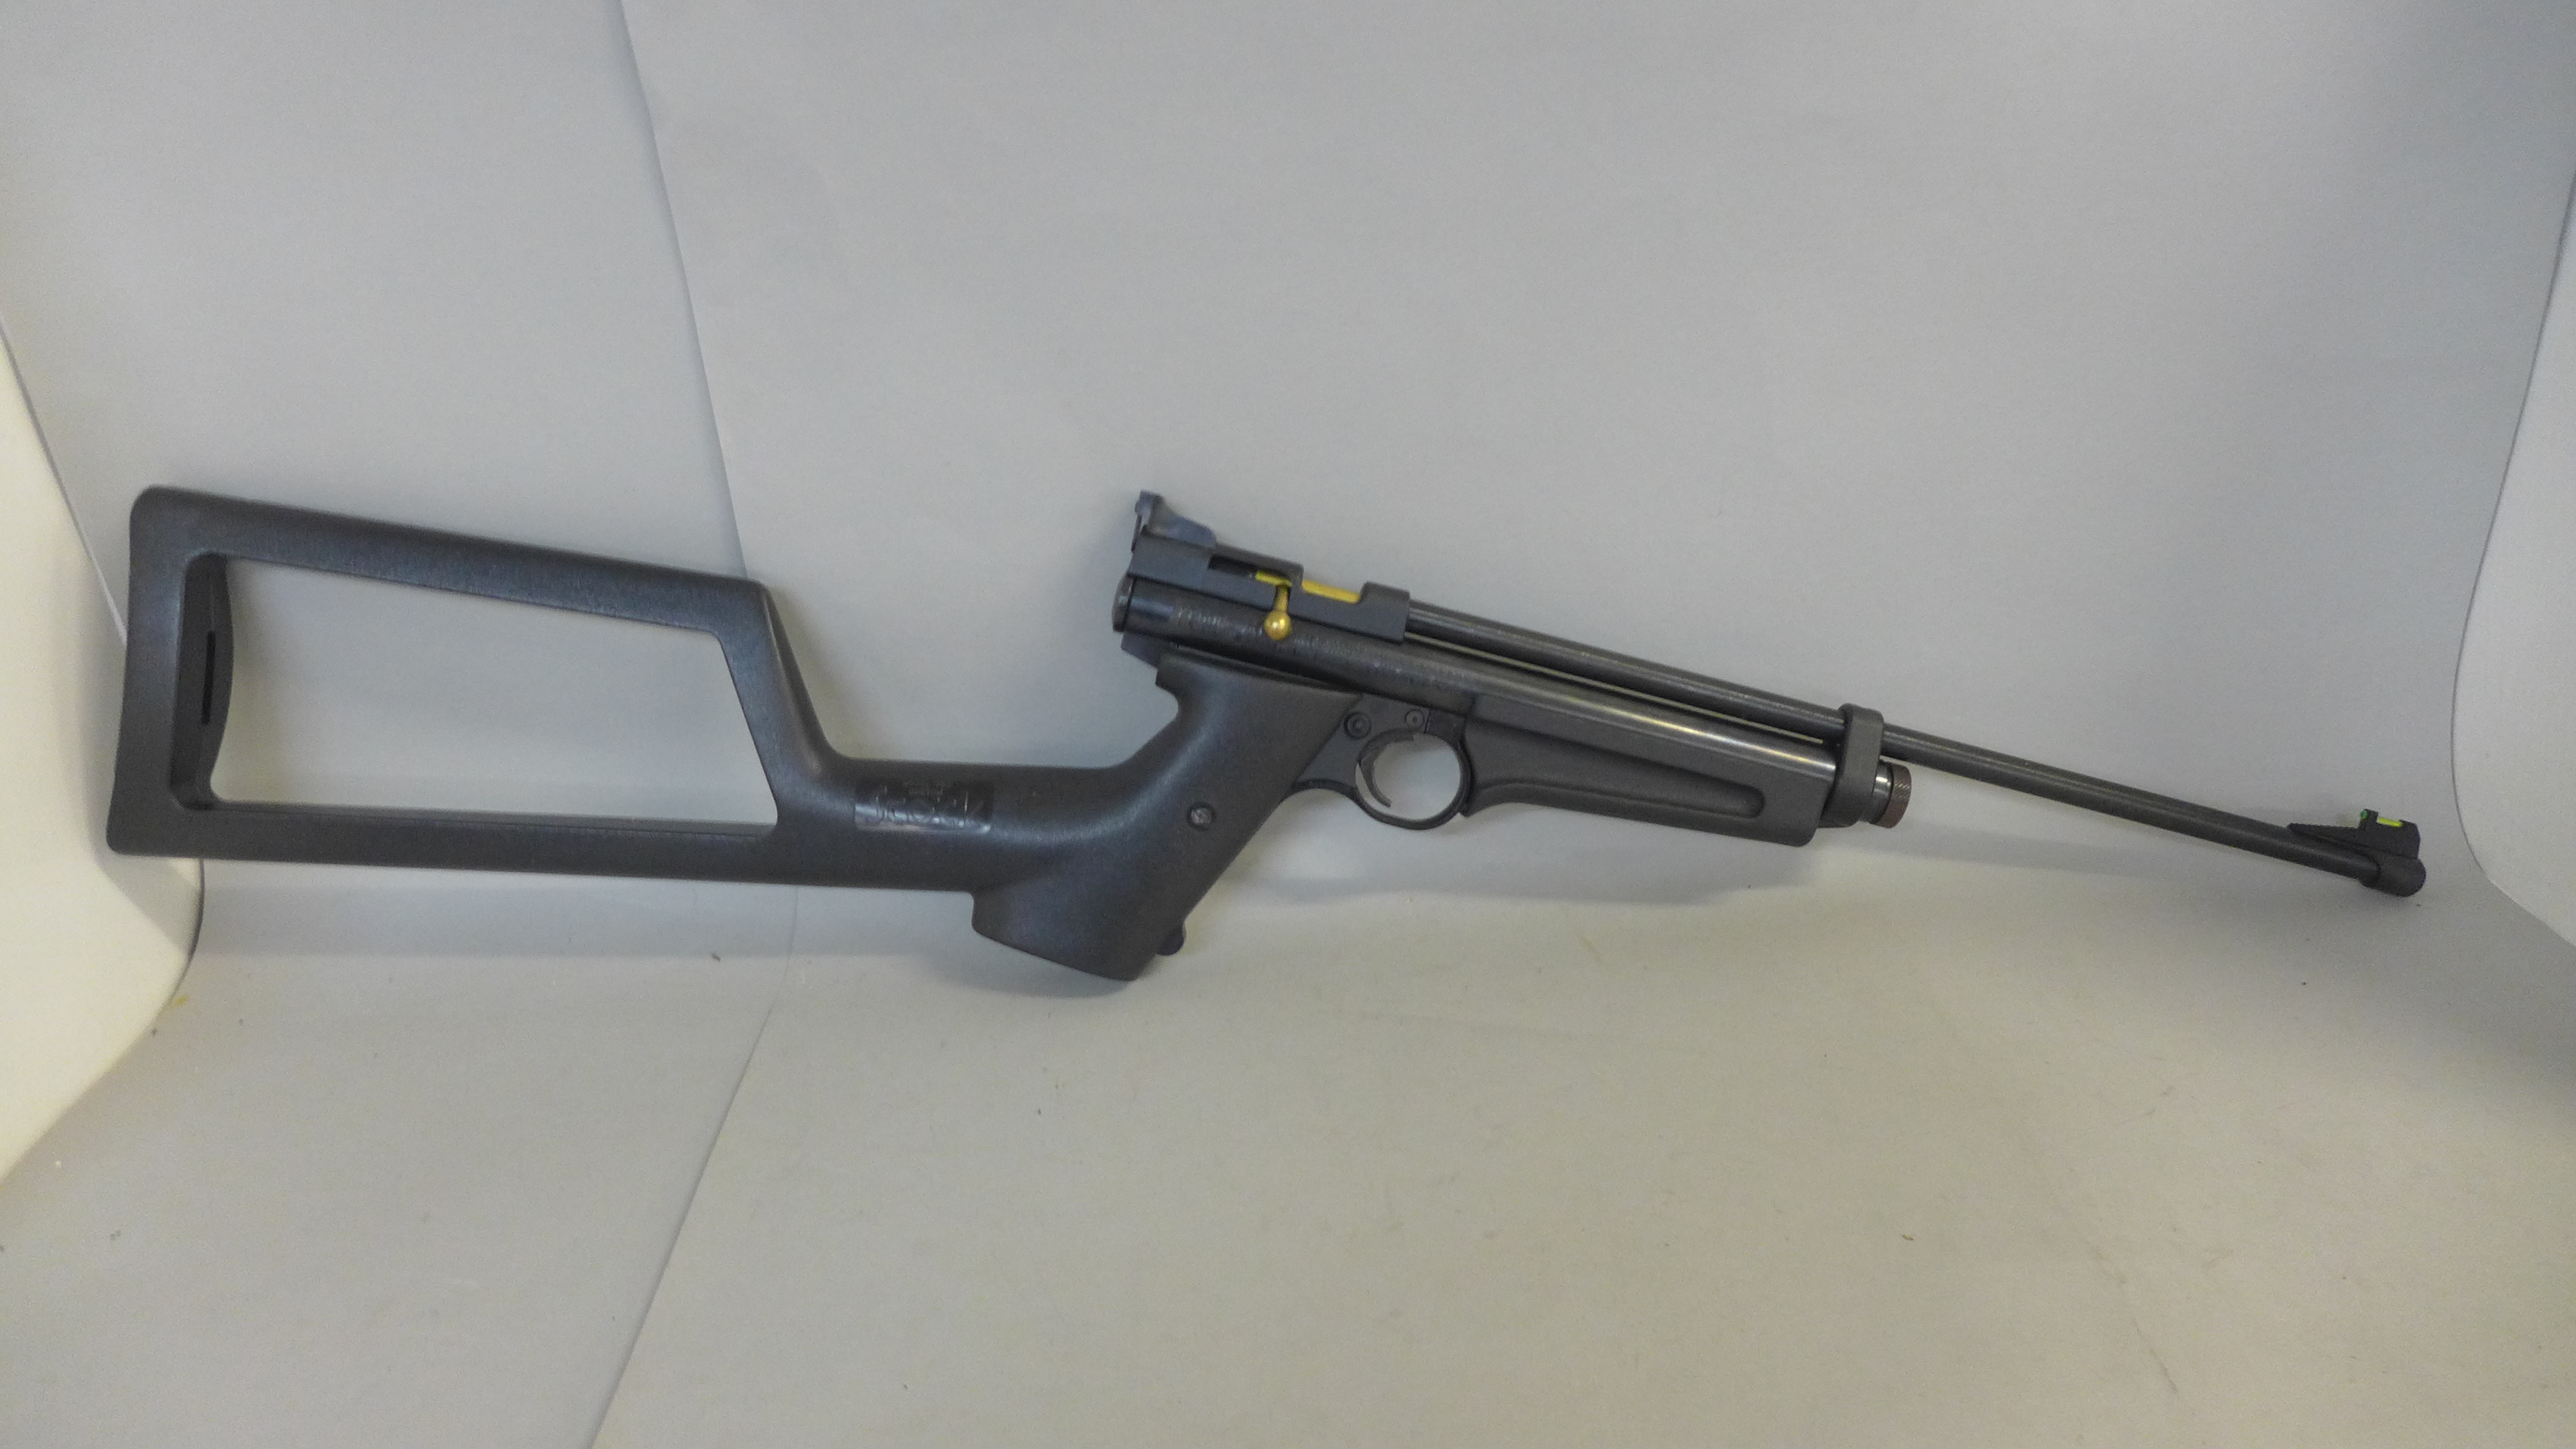 A Crosman model 2250B single shot CO2 target shooting air gun, 0.22 calibre, with owner's manual